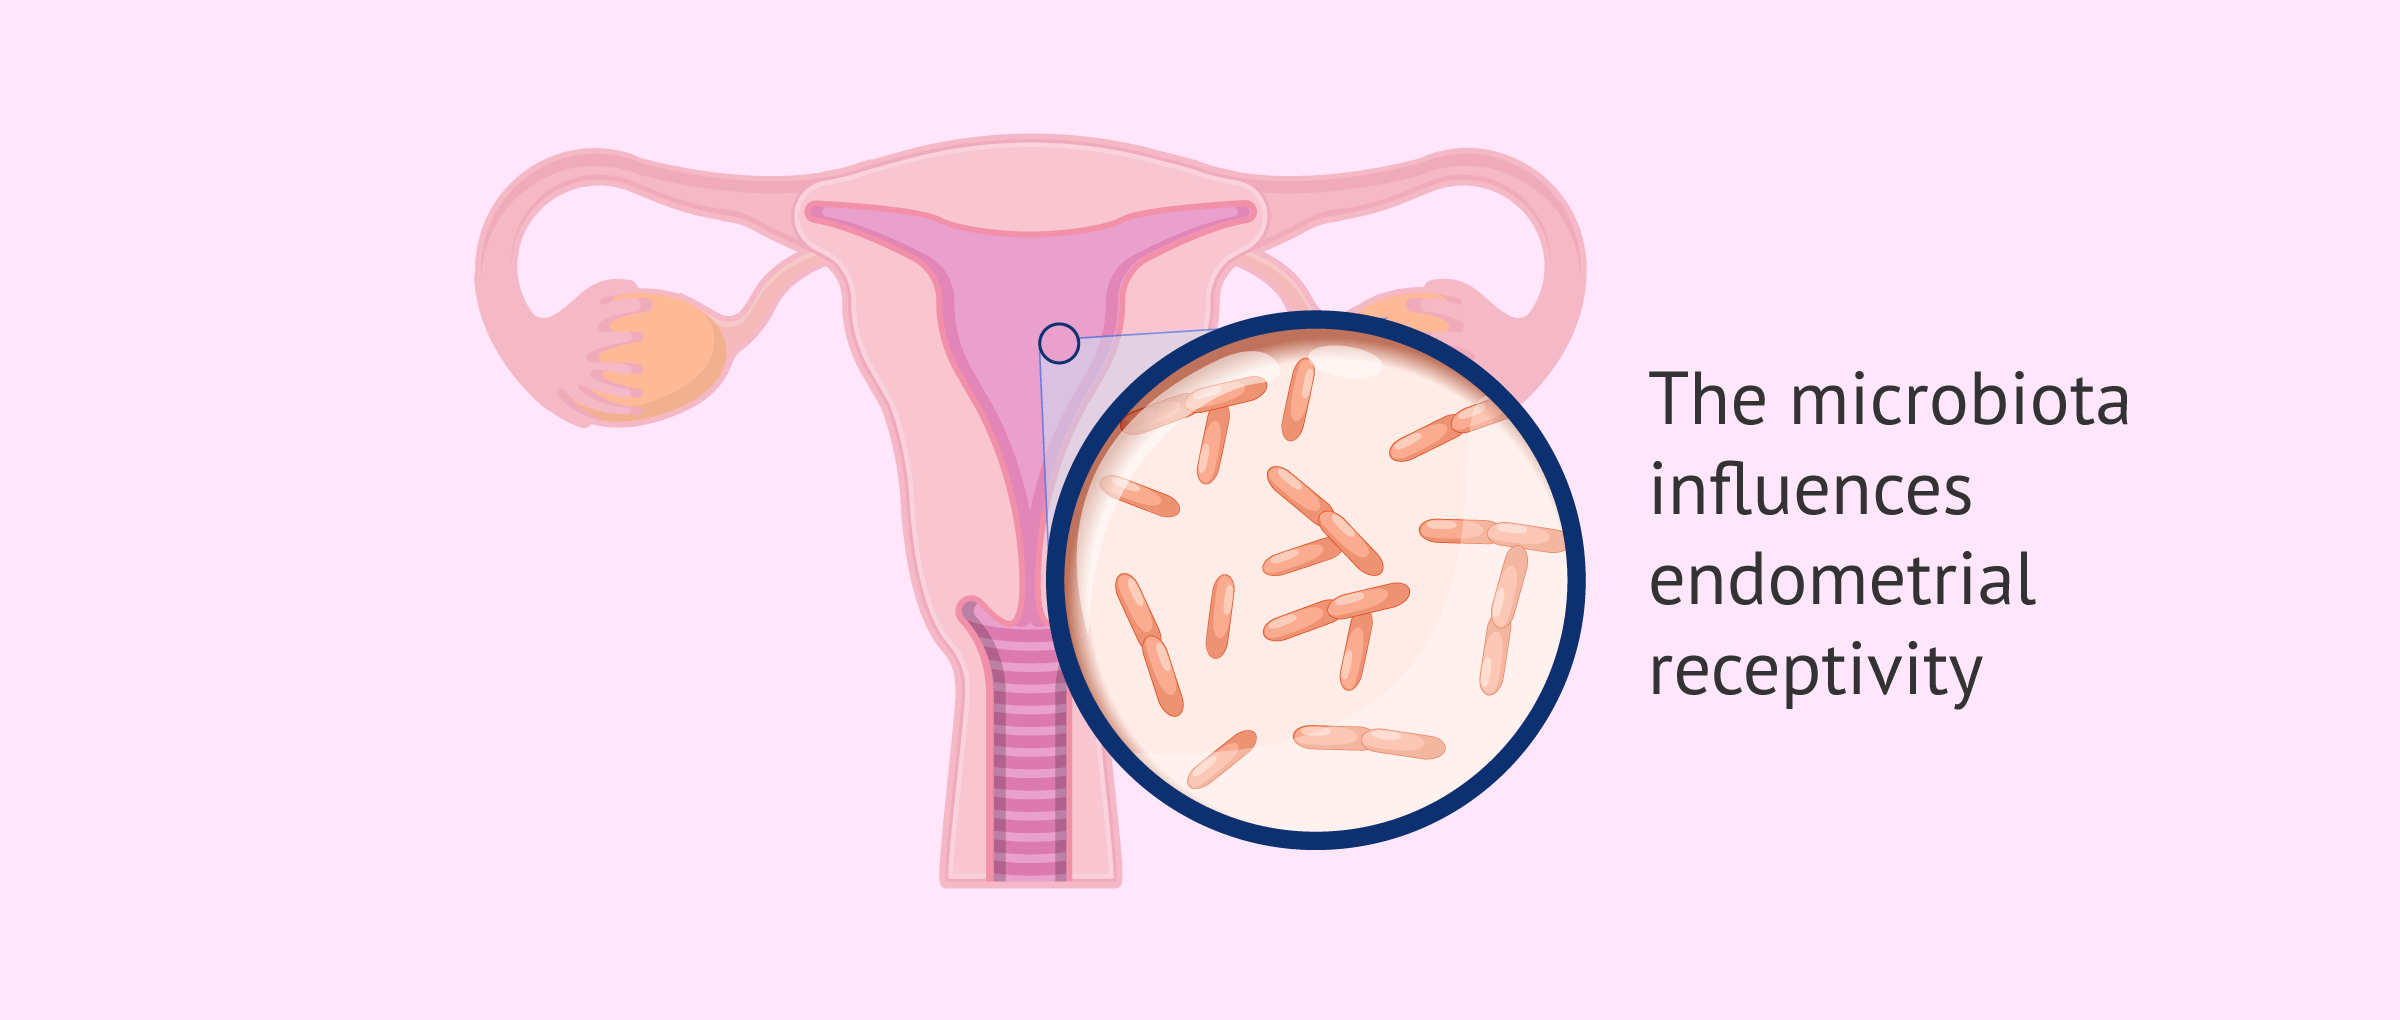 Microbiota and endometrial receptivity